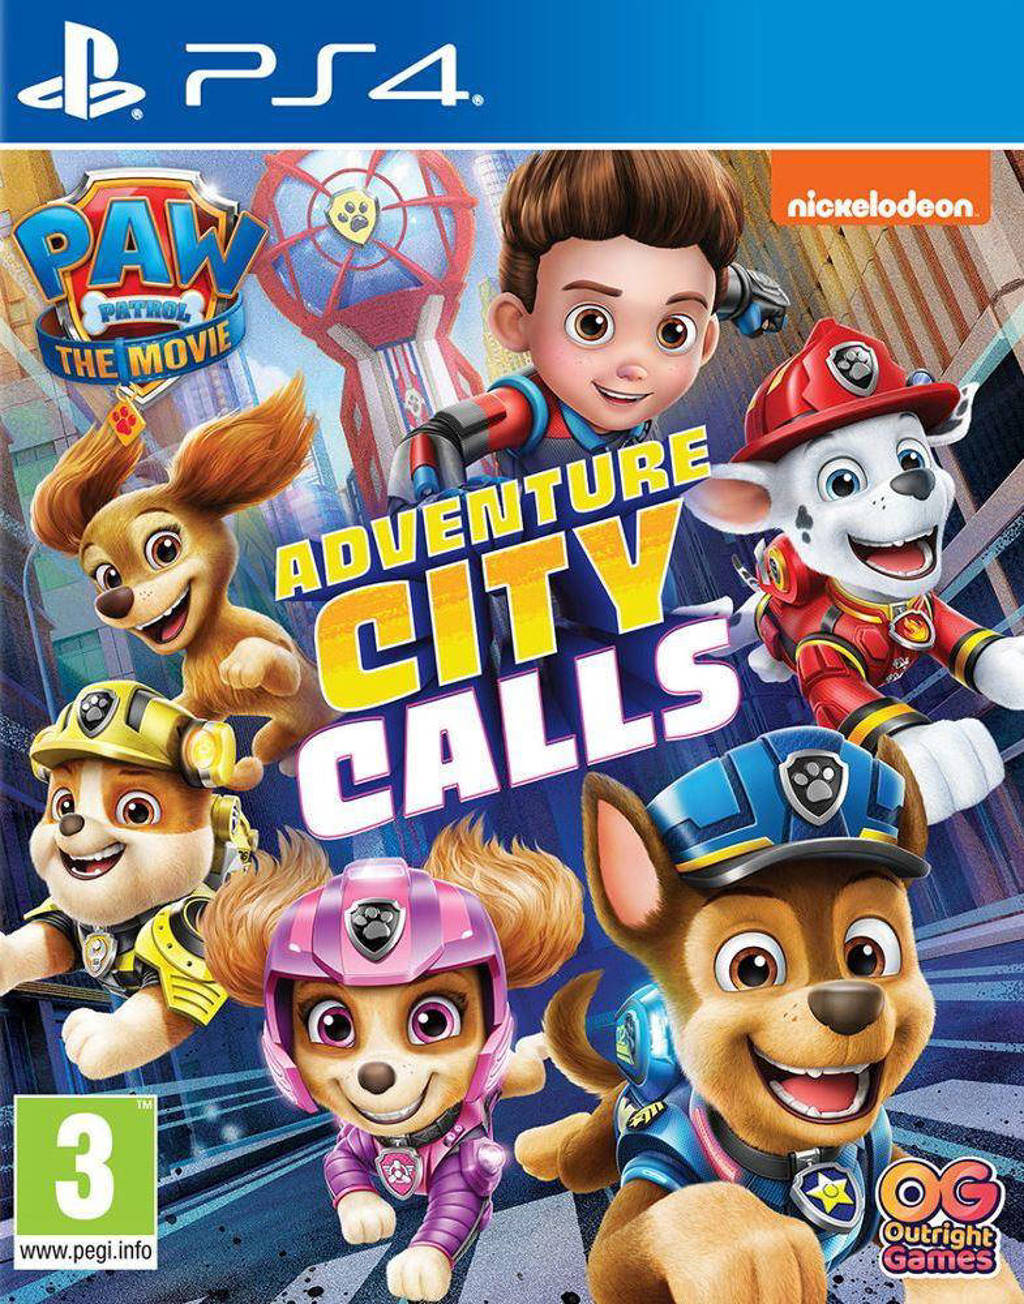 Paw Patrol the movie - Adventure city calls (PlayStation 4)